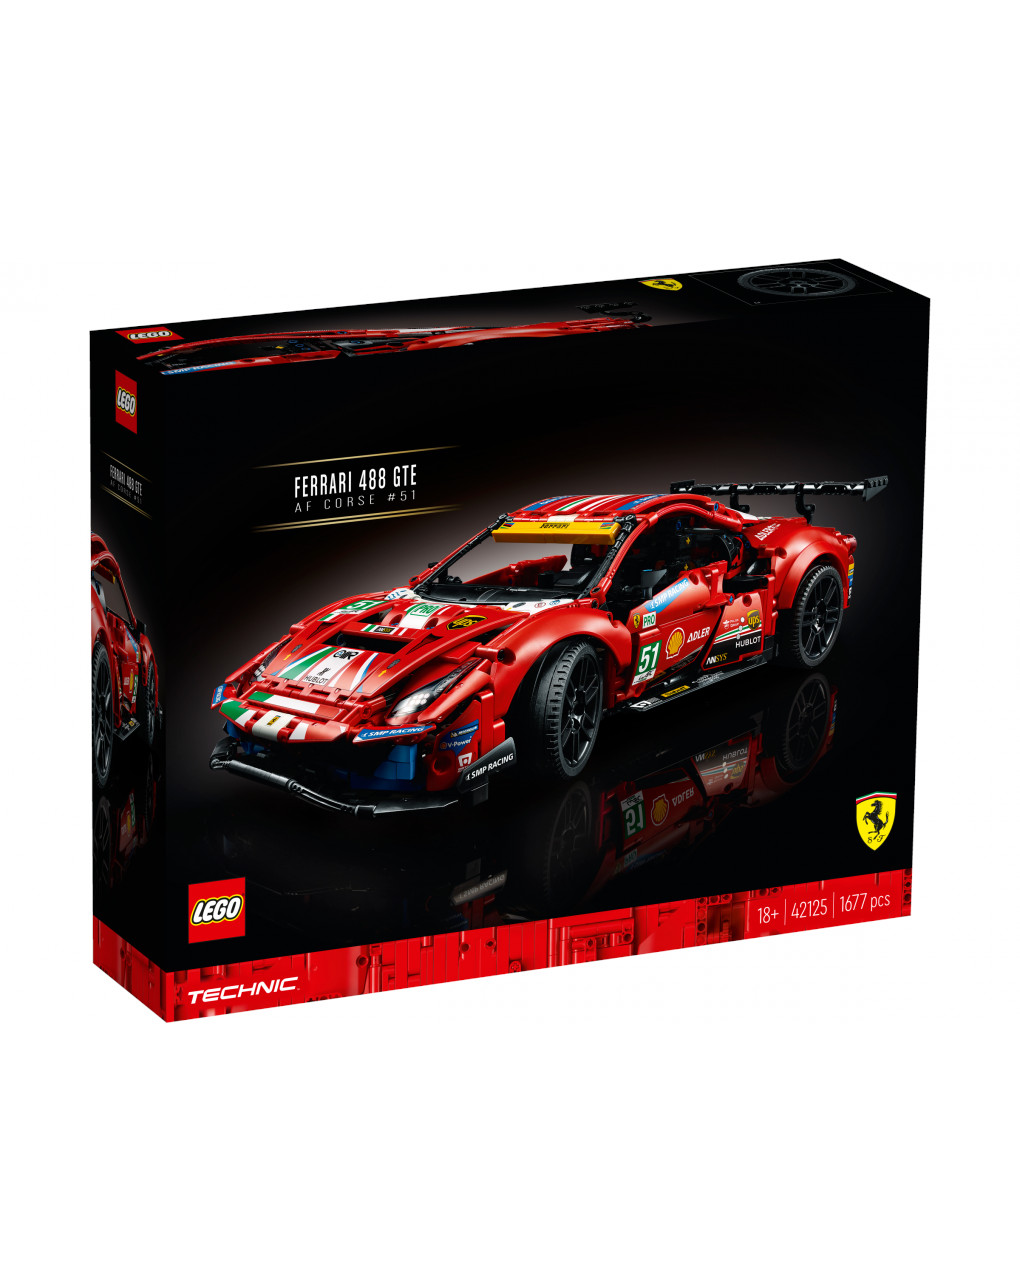 Lego technic - ferrari 488 gte "of corse # 51" - 42125 - LEGO